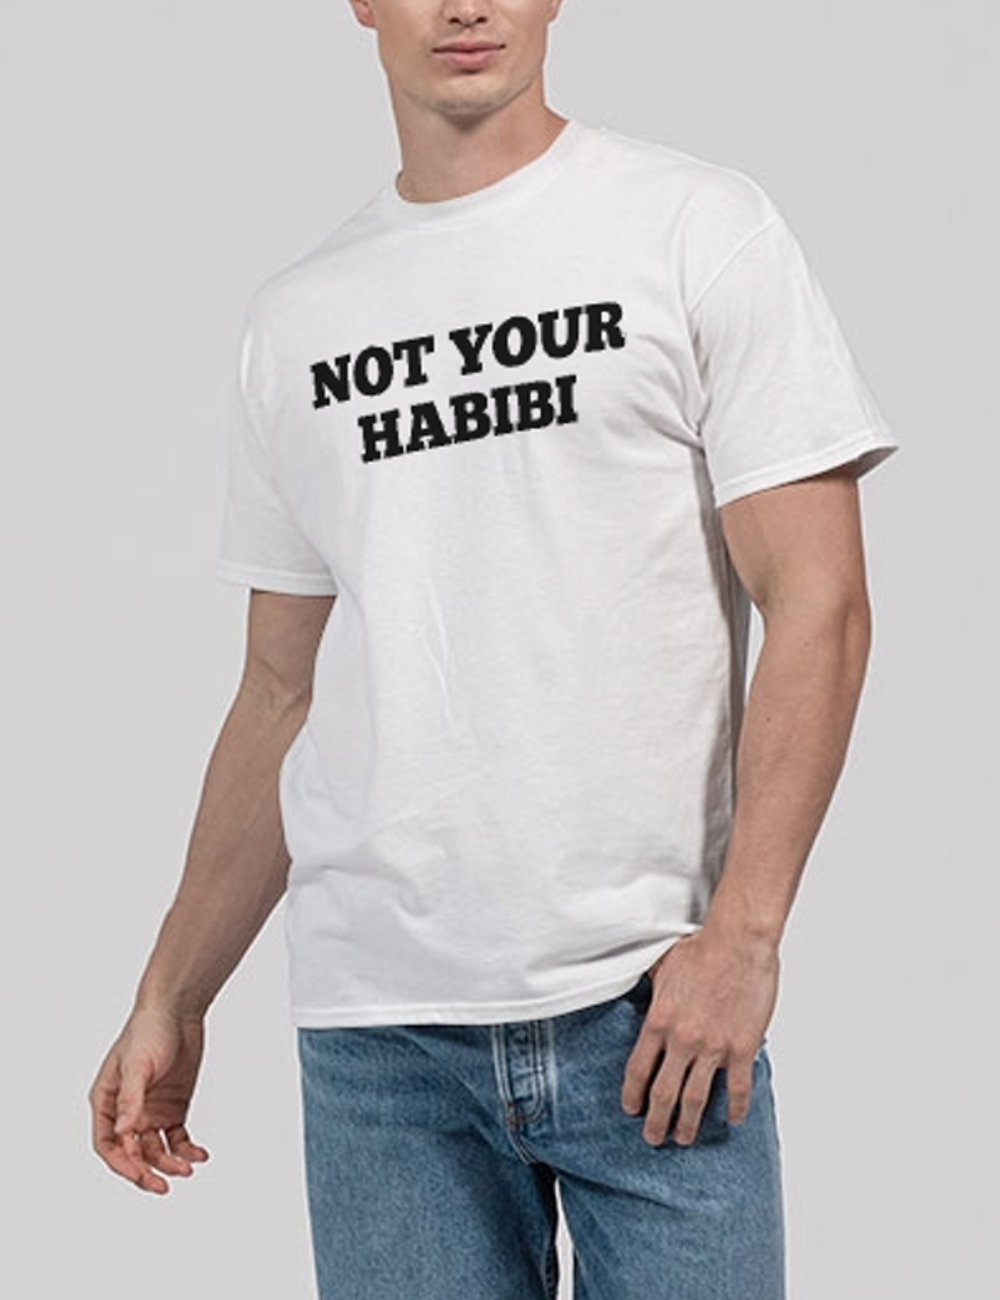 Not Your Habibi Men's Classic T-Shirt OniTakai